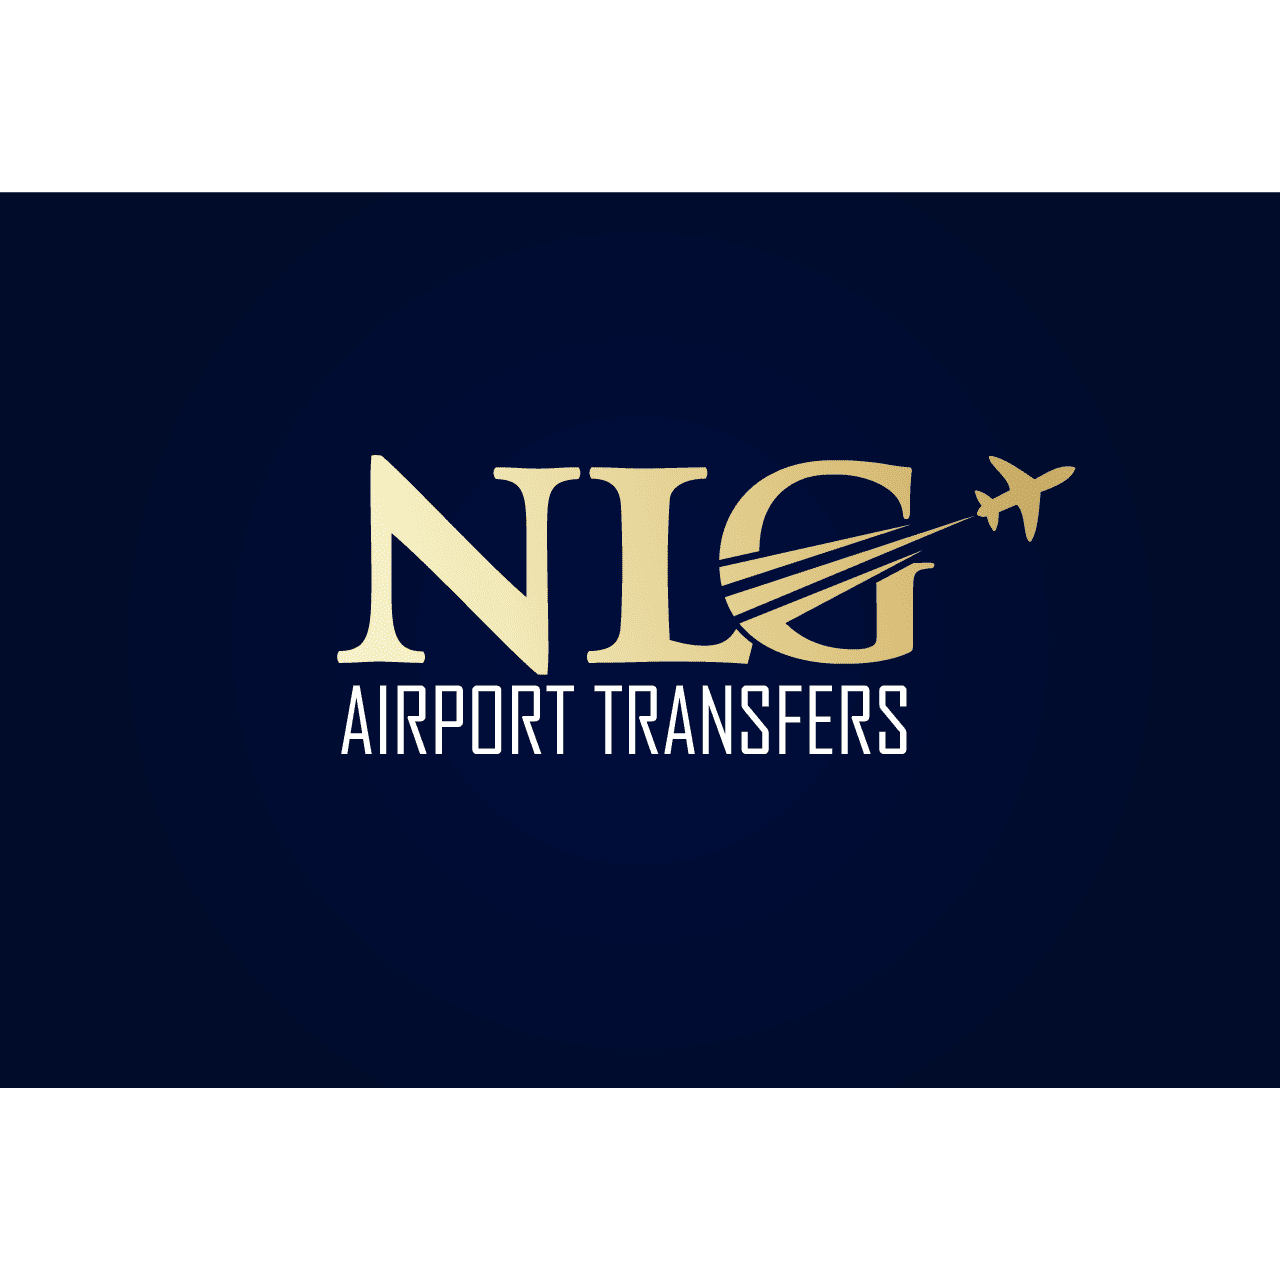 NLG Airport Transfers Logo